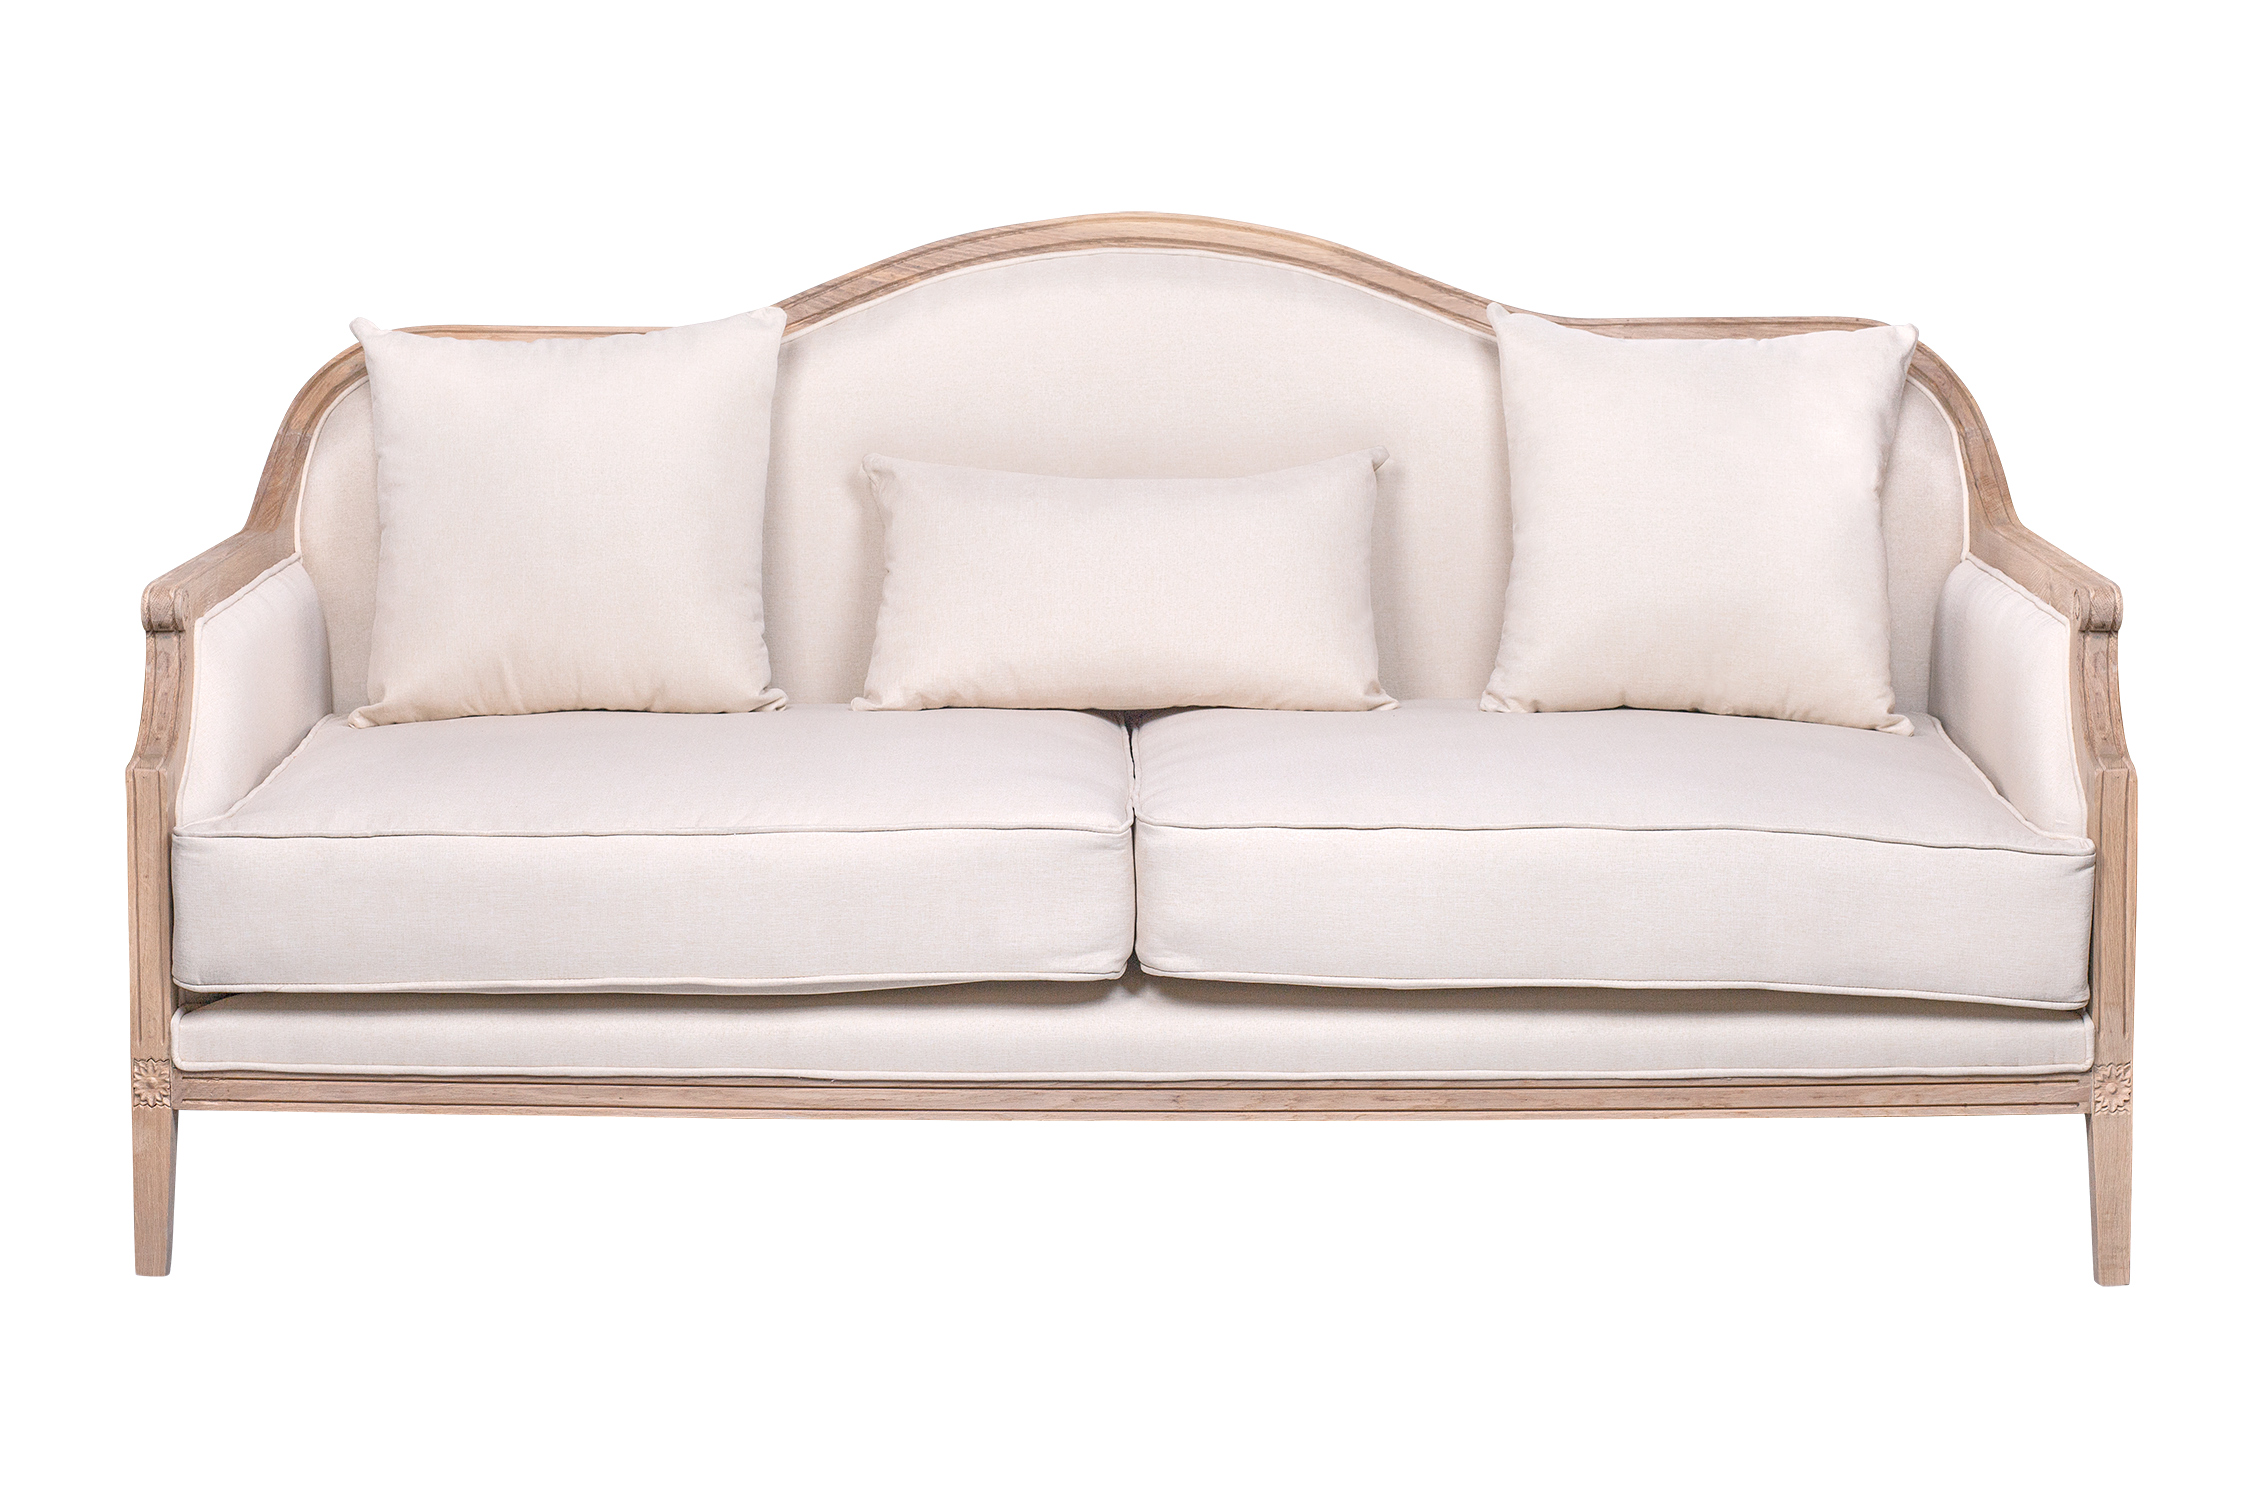 Трехместные диваны  The Furnish Диван madesta beige (mak-interior) бежевый 190x100x90 см.